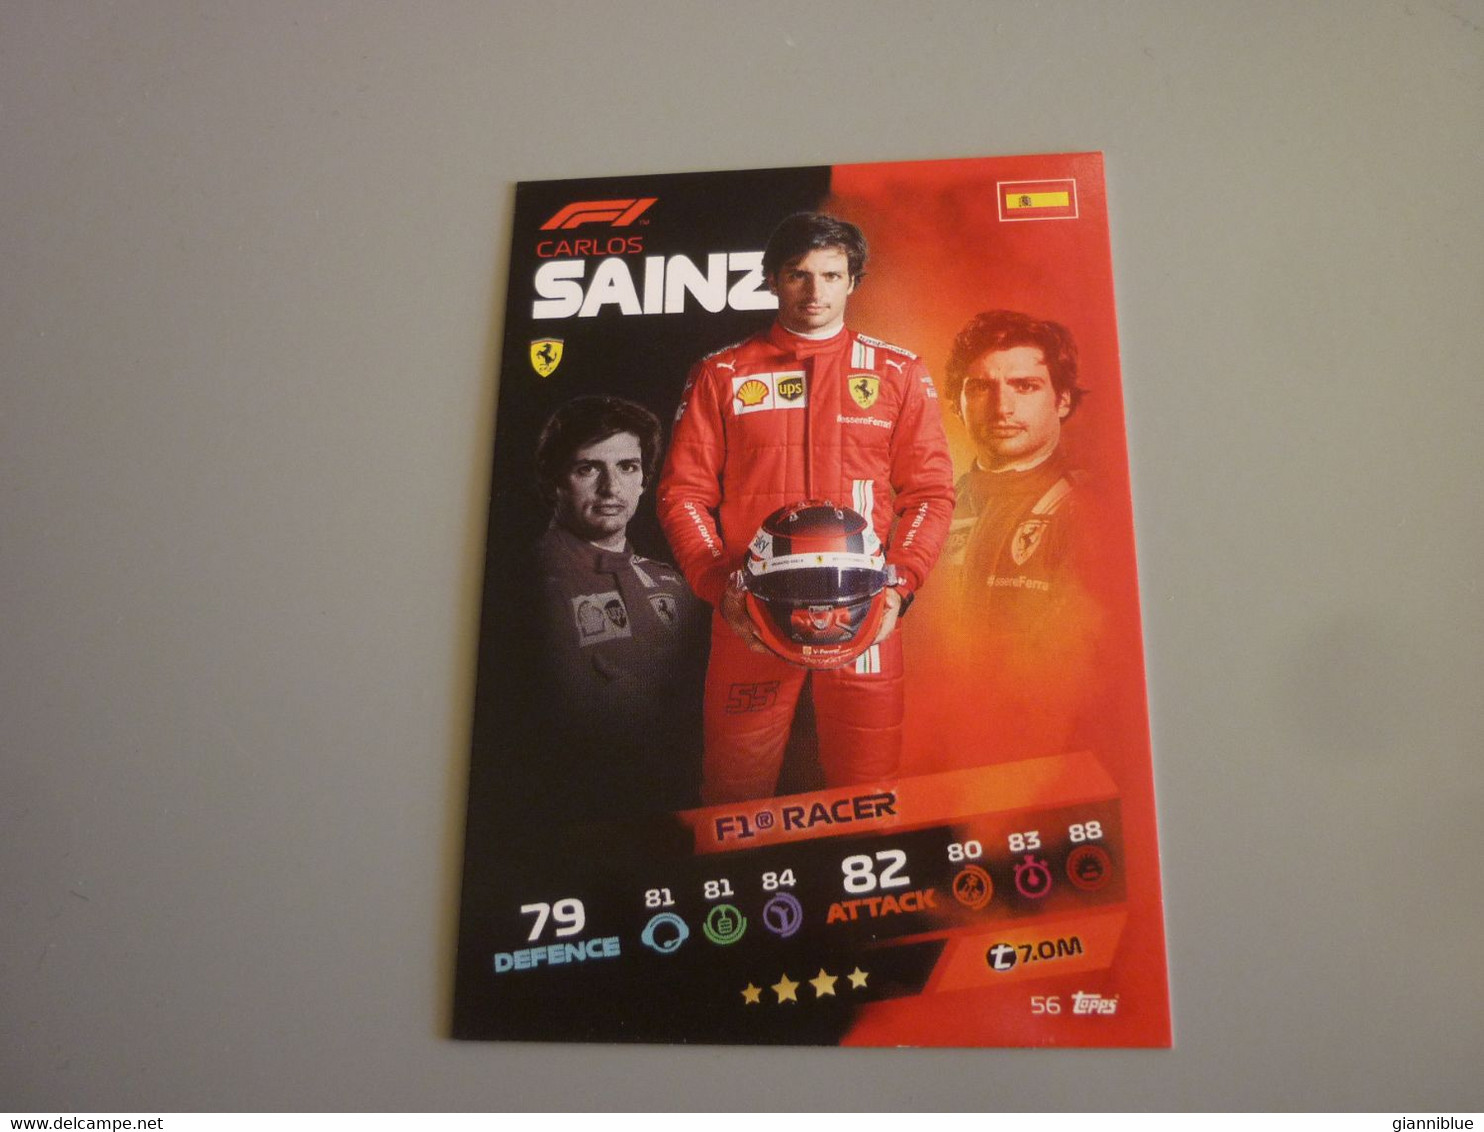 Carlos Sainz Ferrari Shell Formula 1 F1 Topps Turbo Atax 2021 Trading Card - Automobile - F1